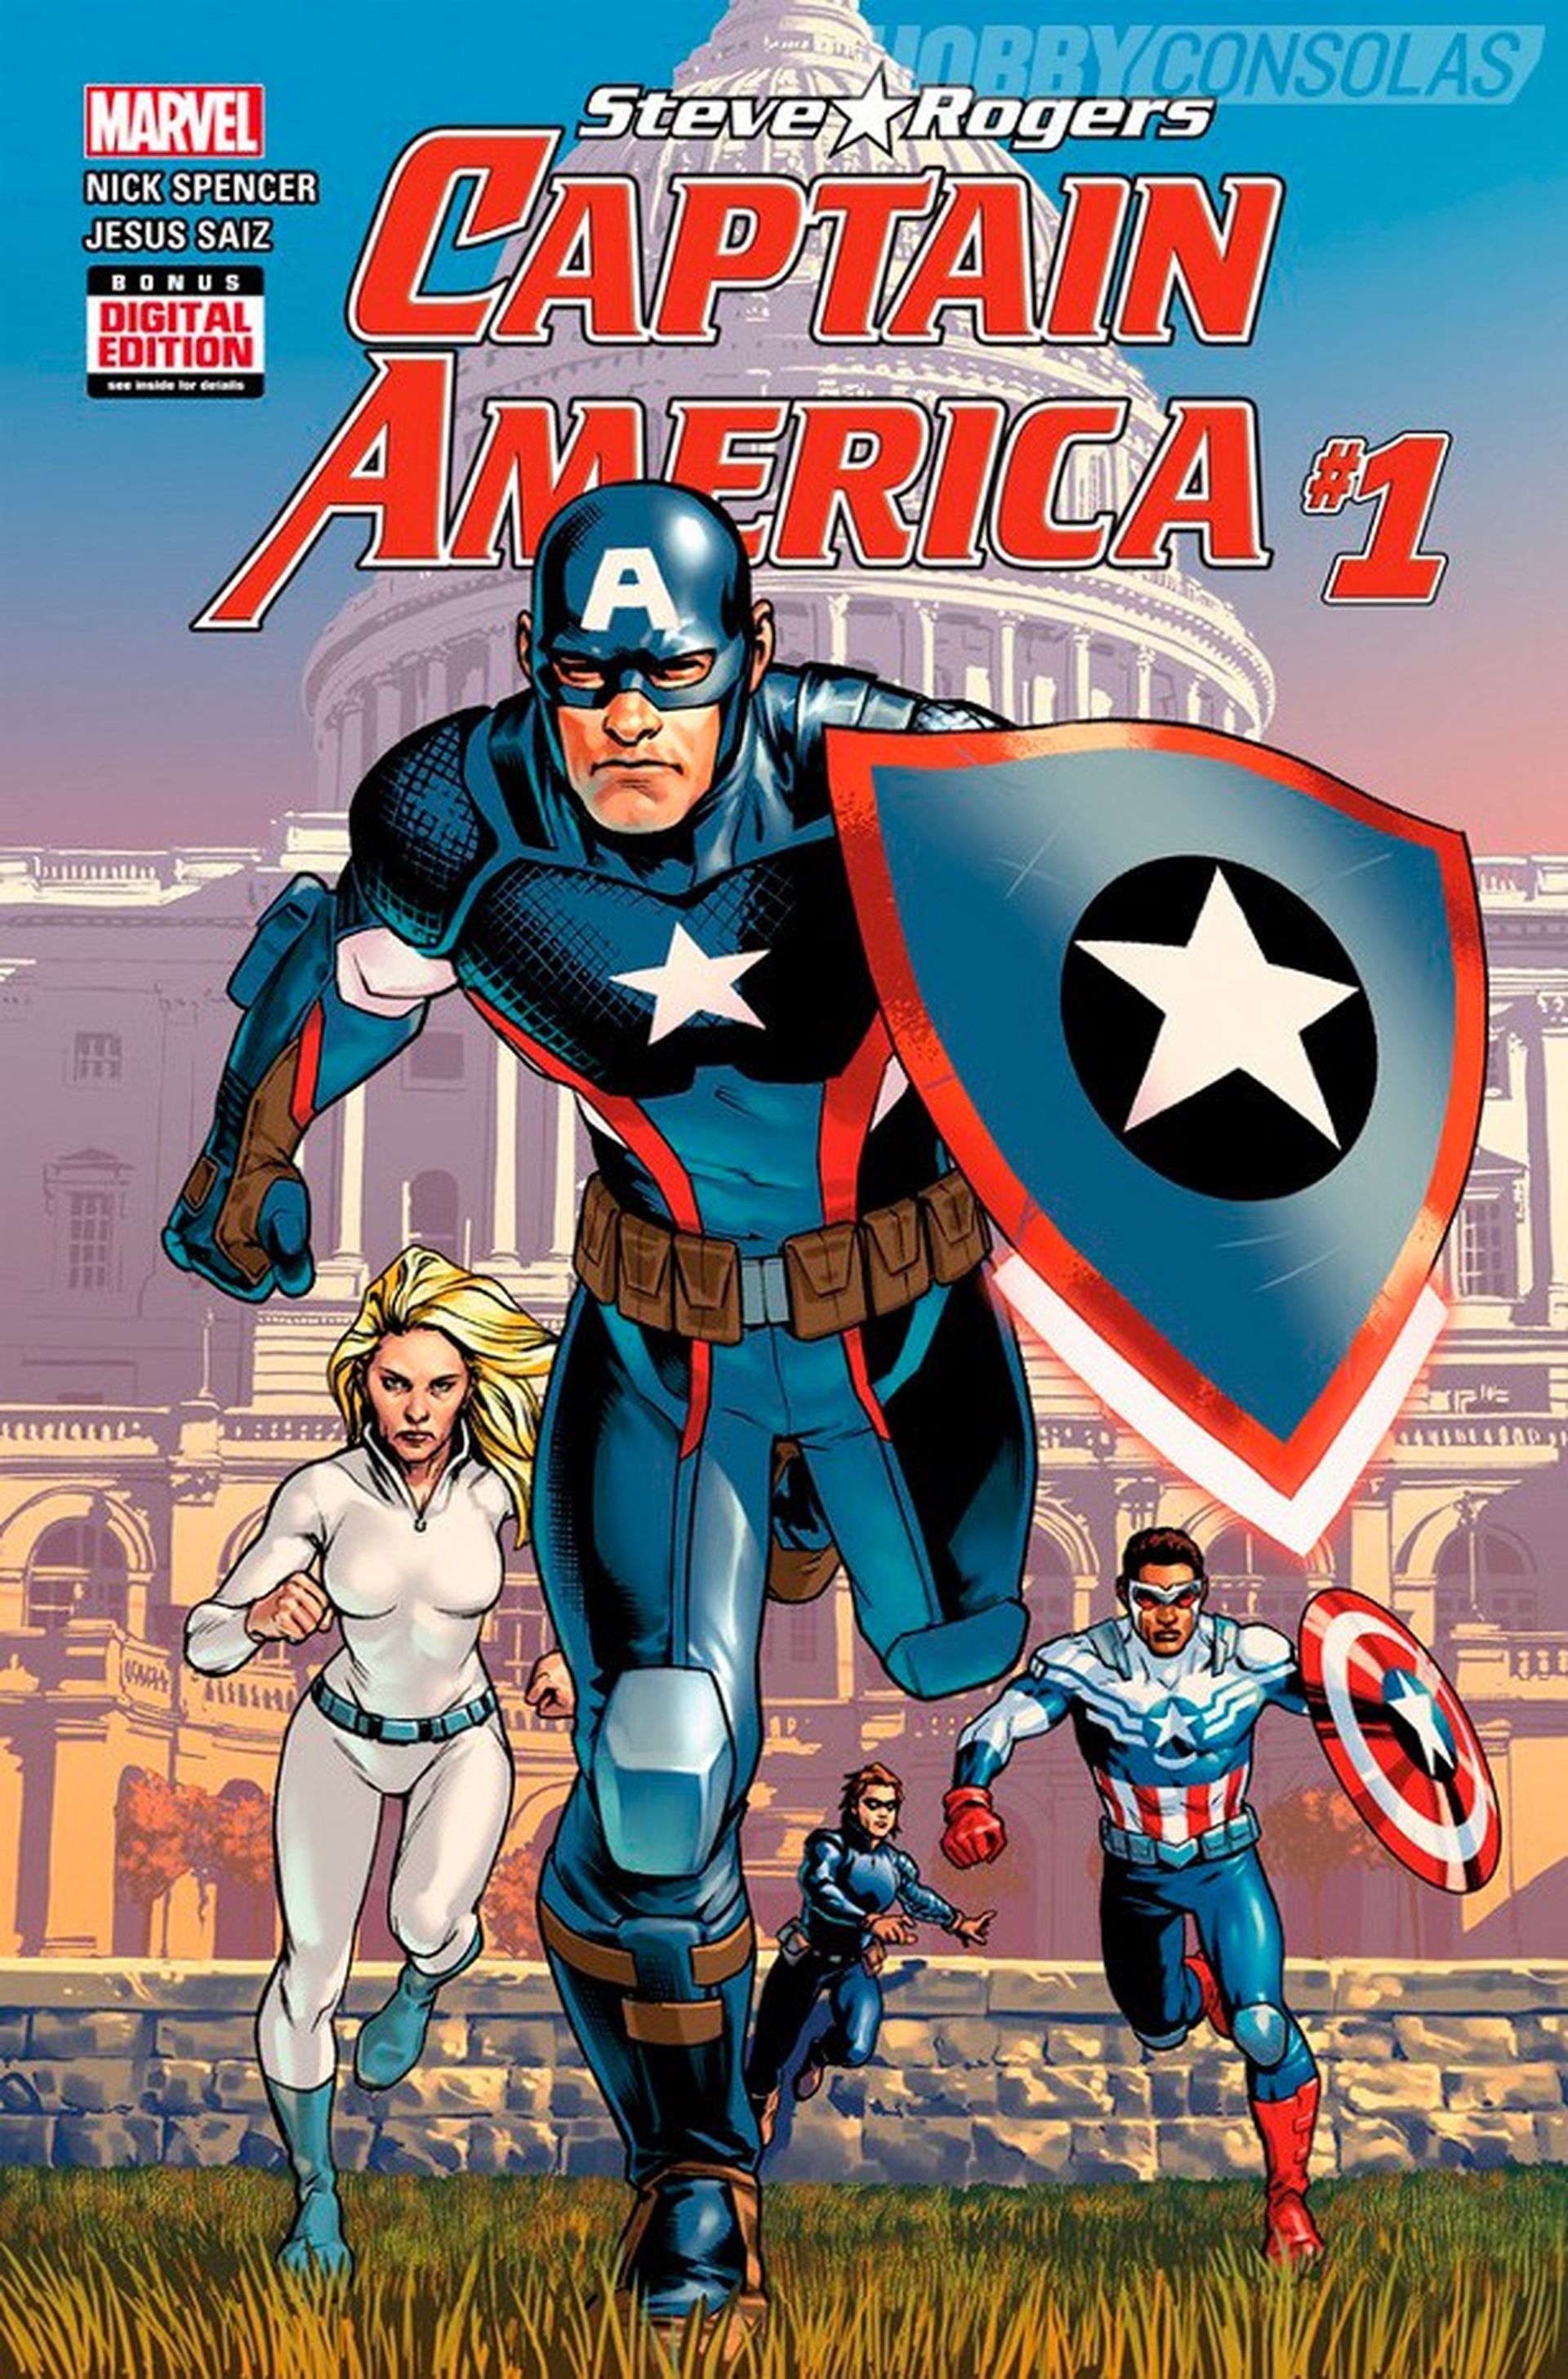 Captain America: Steve Rogers #1 - Avance del Cómic